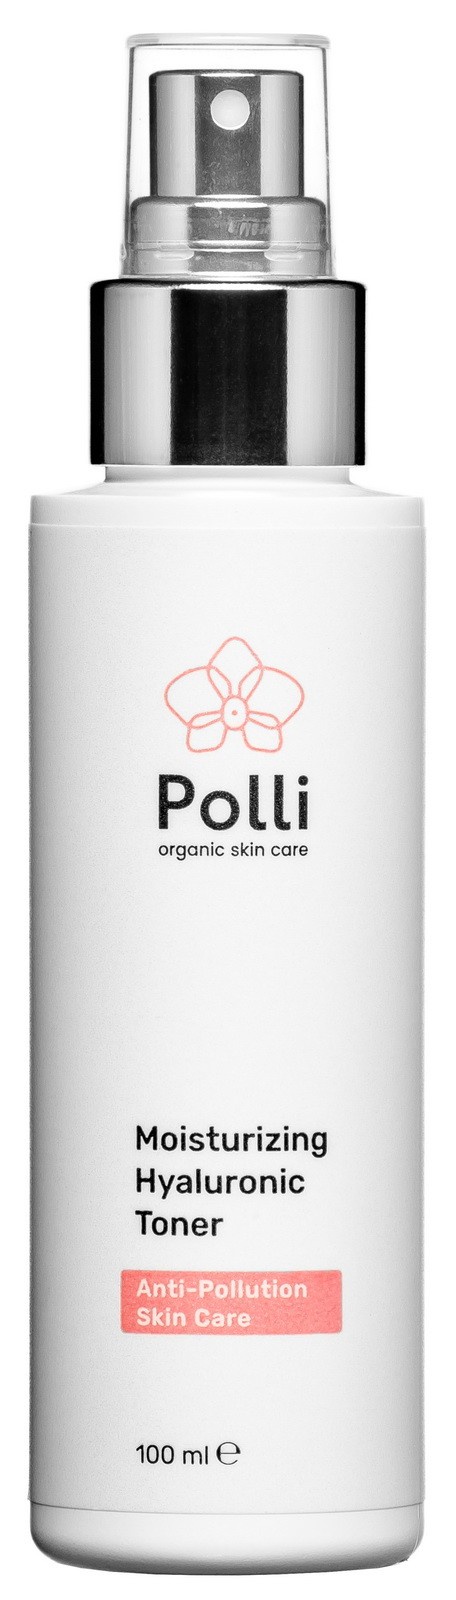 фото Тоник для лица Polli Organic Skin Care увлажняющий с гиалуроном, 100 мл